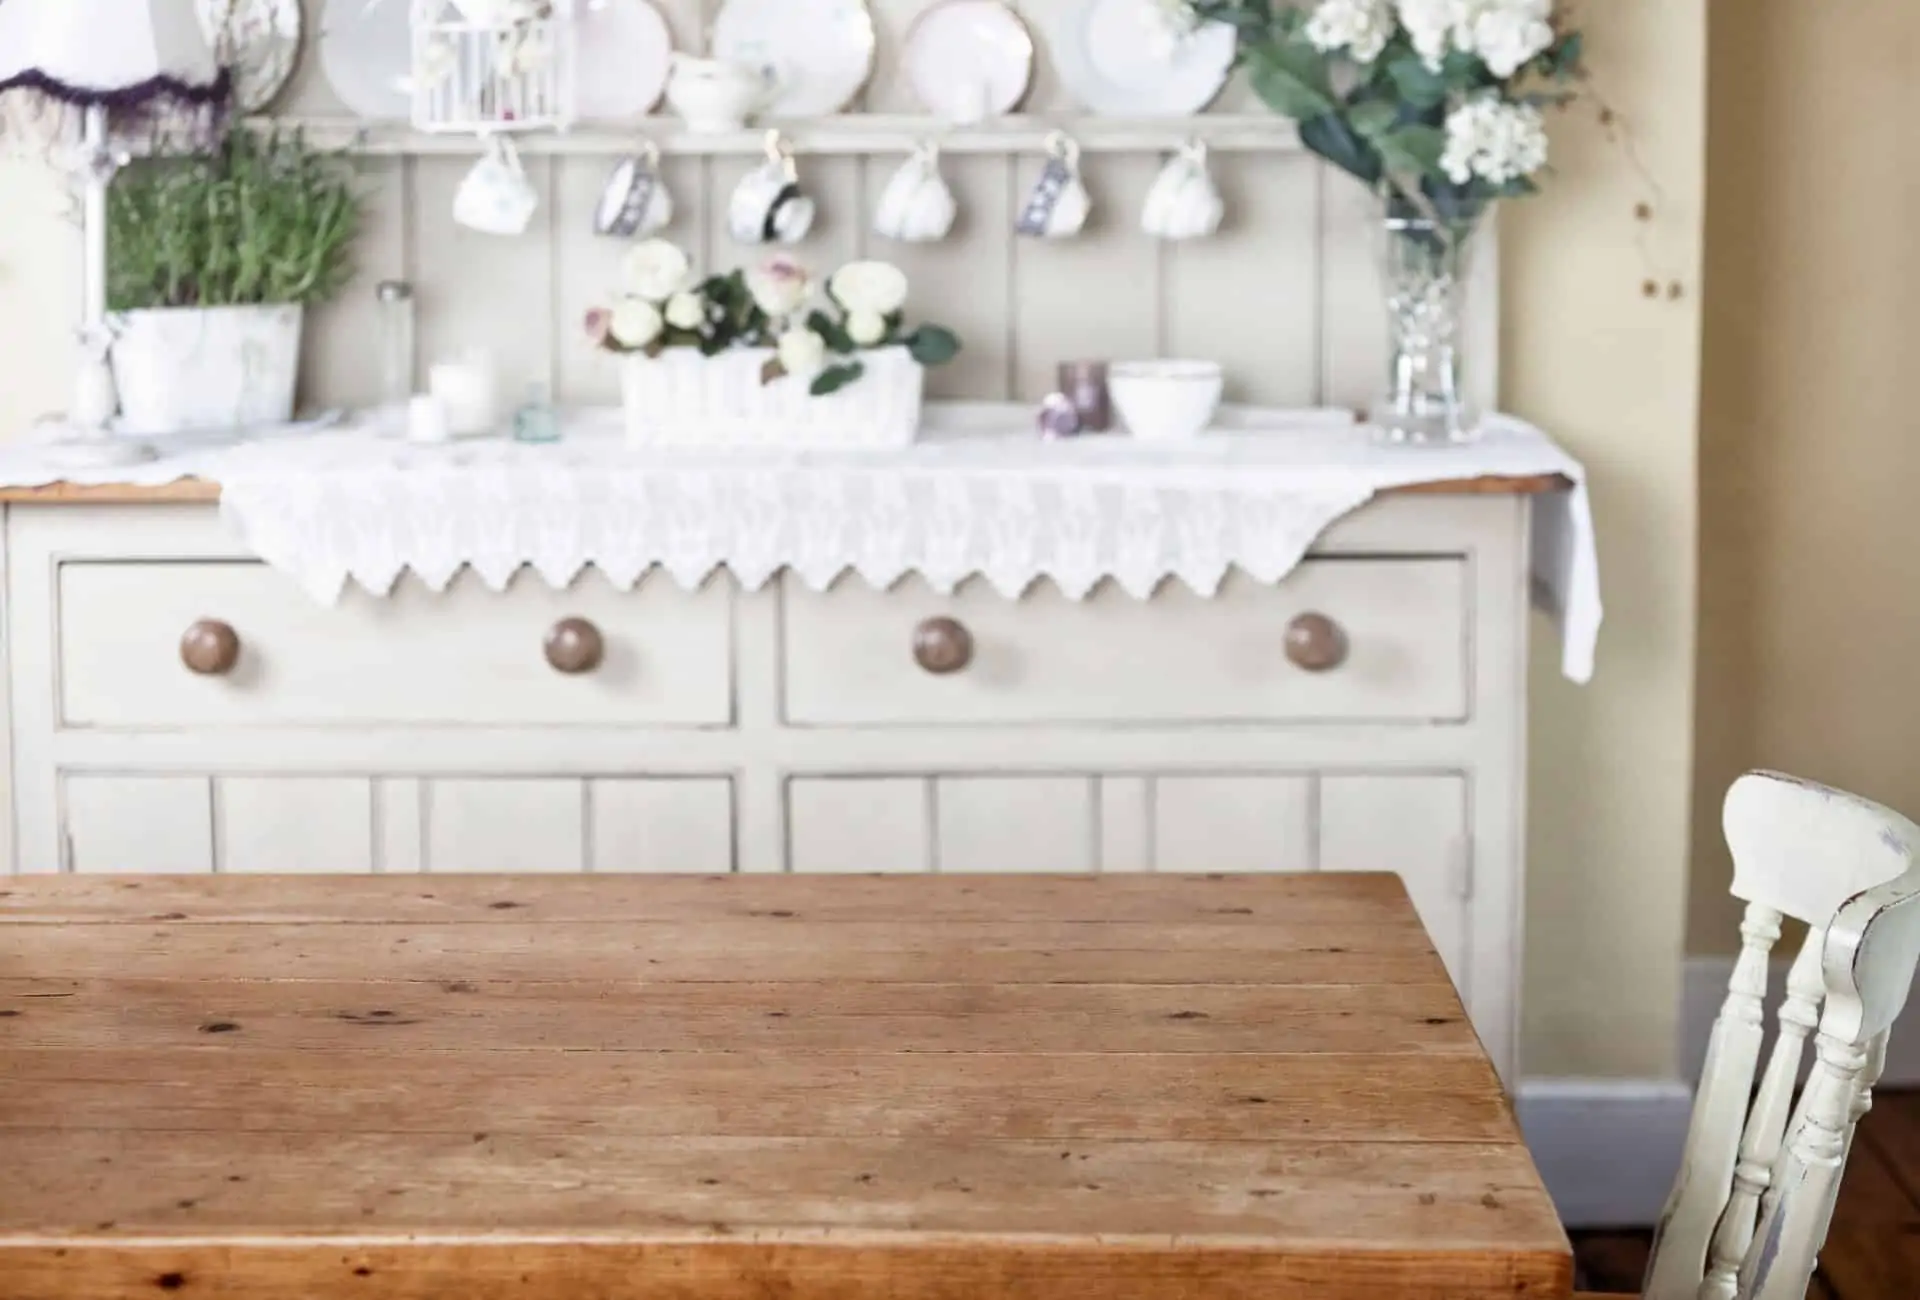 White cottagecore kitchen with vintage ceramics on display.